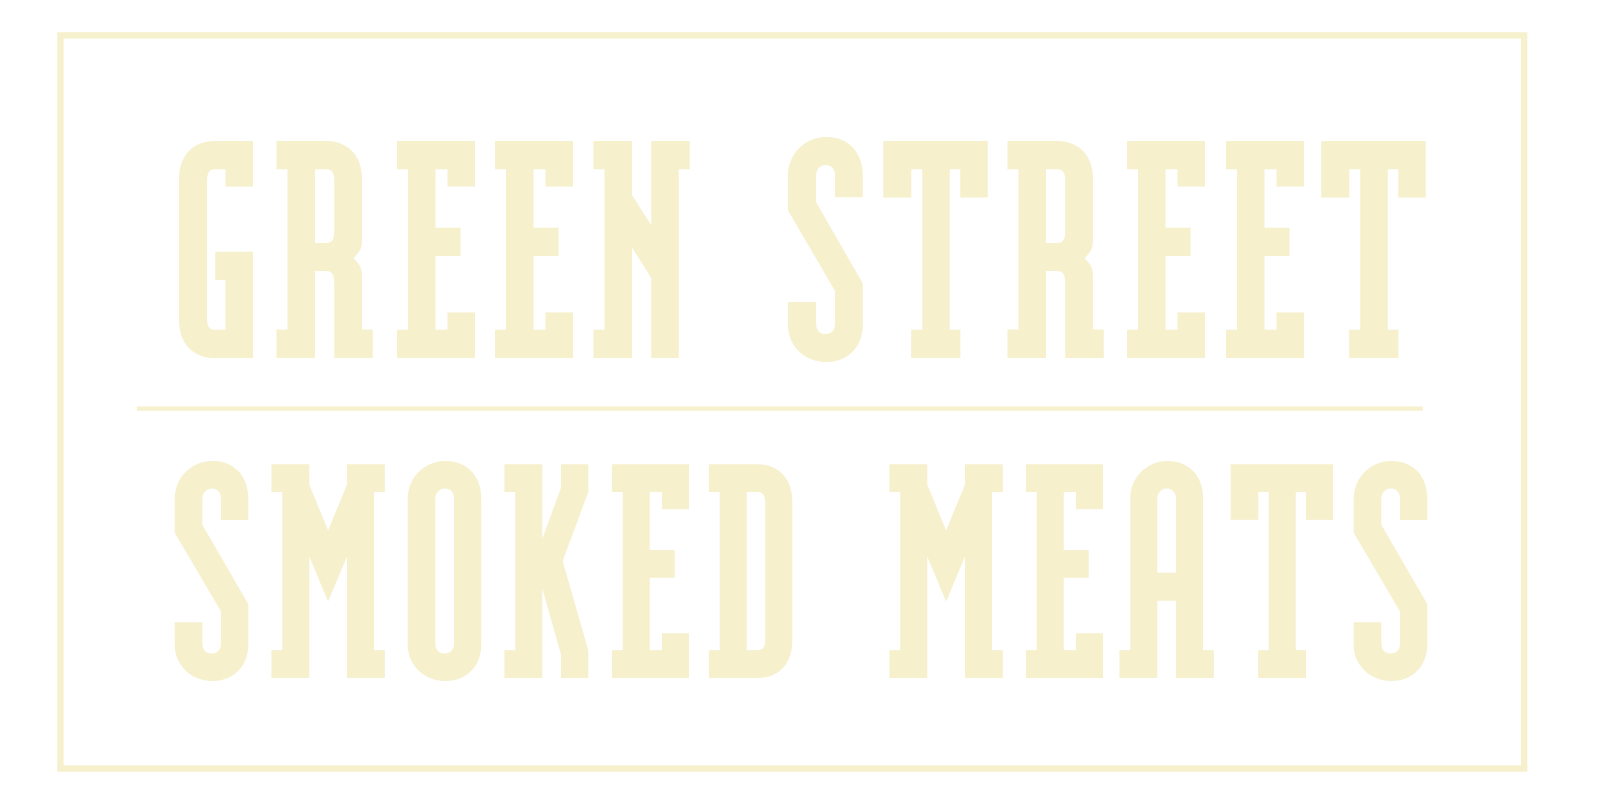 Green Street Smoked Meats